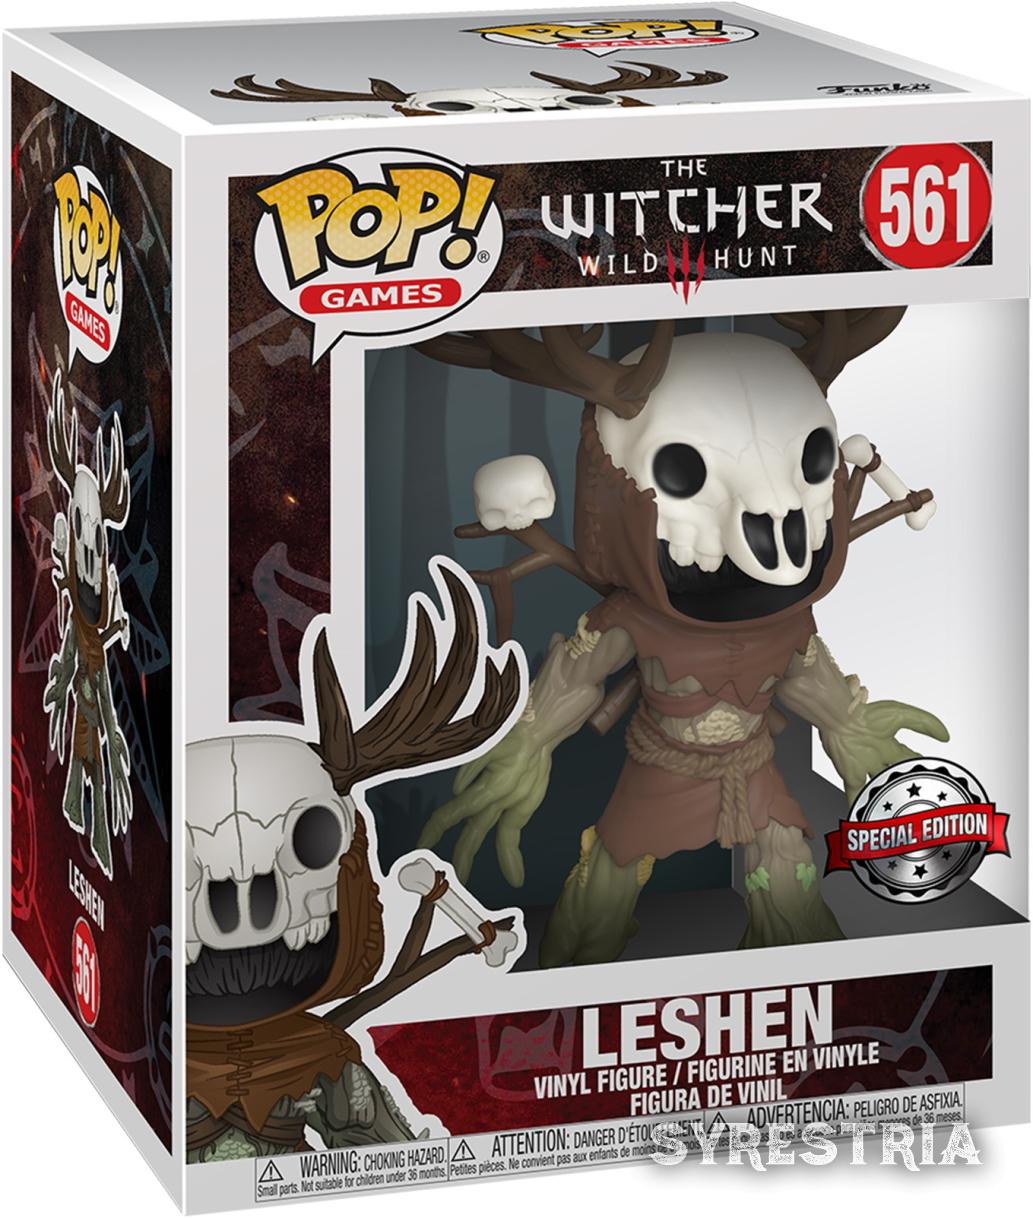 The Witcher 3 Wild Hunt - Leshen 561 Special Edition - Funko Pop! - Vinyl Figur